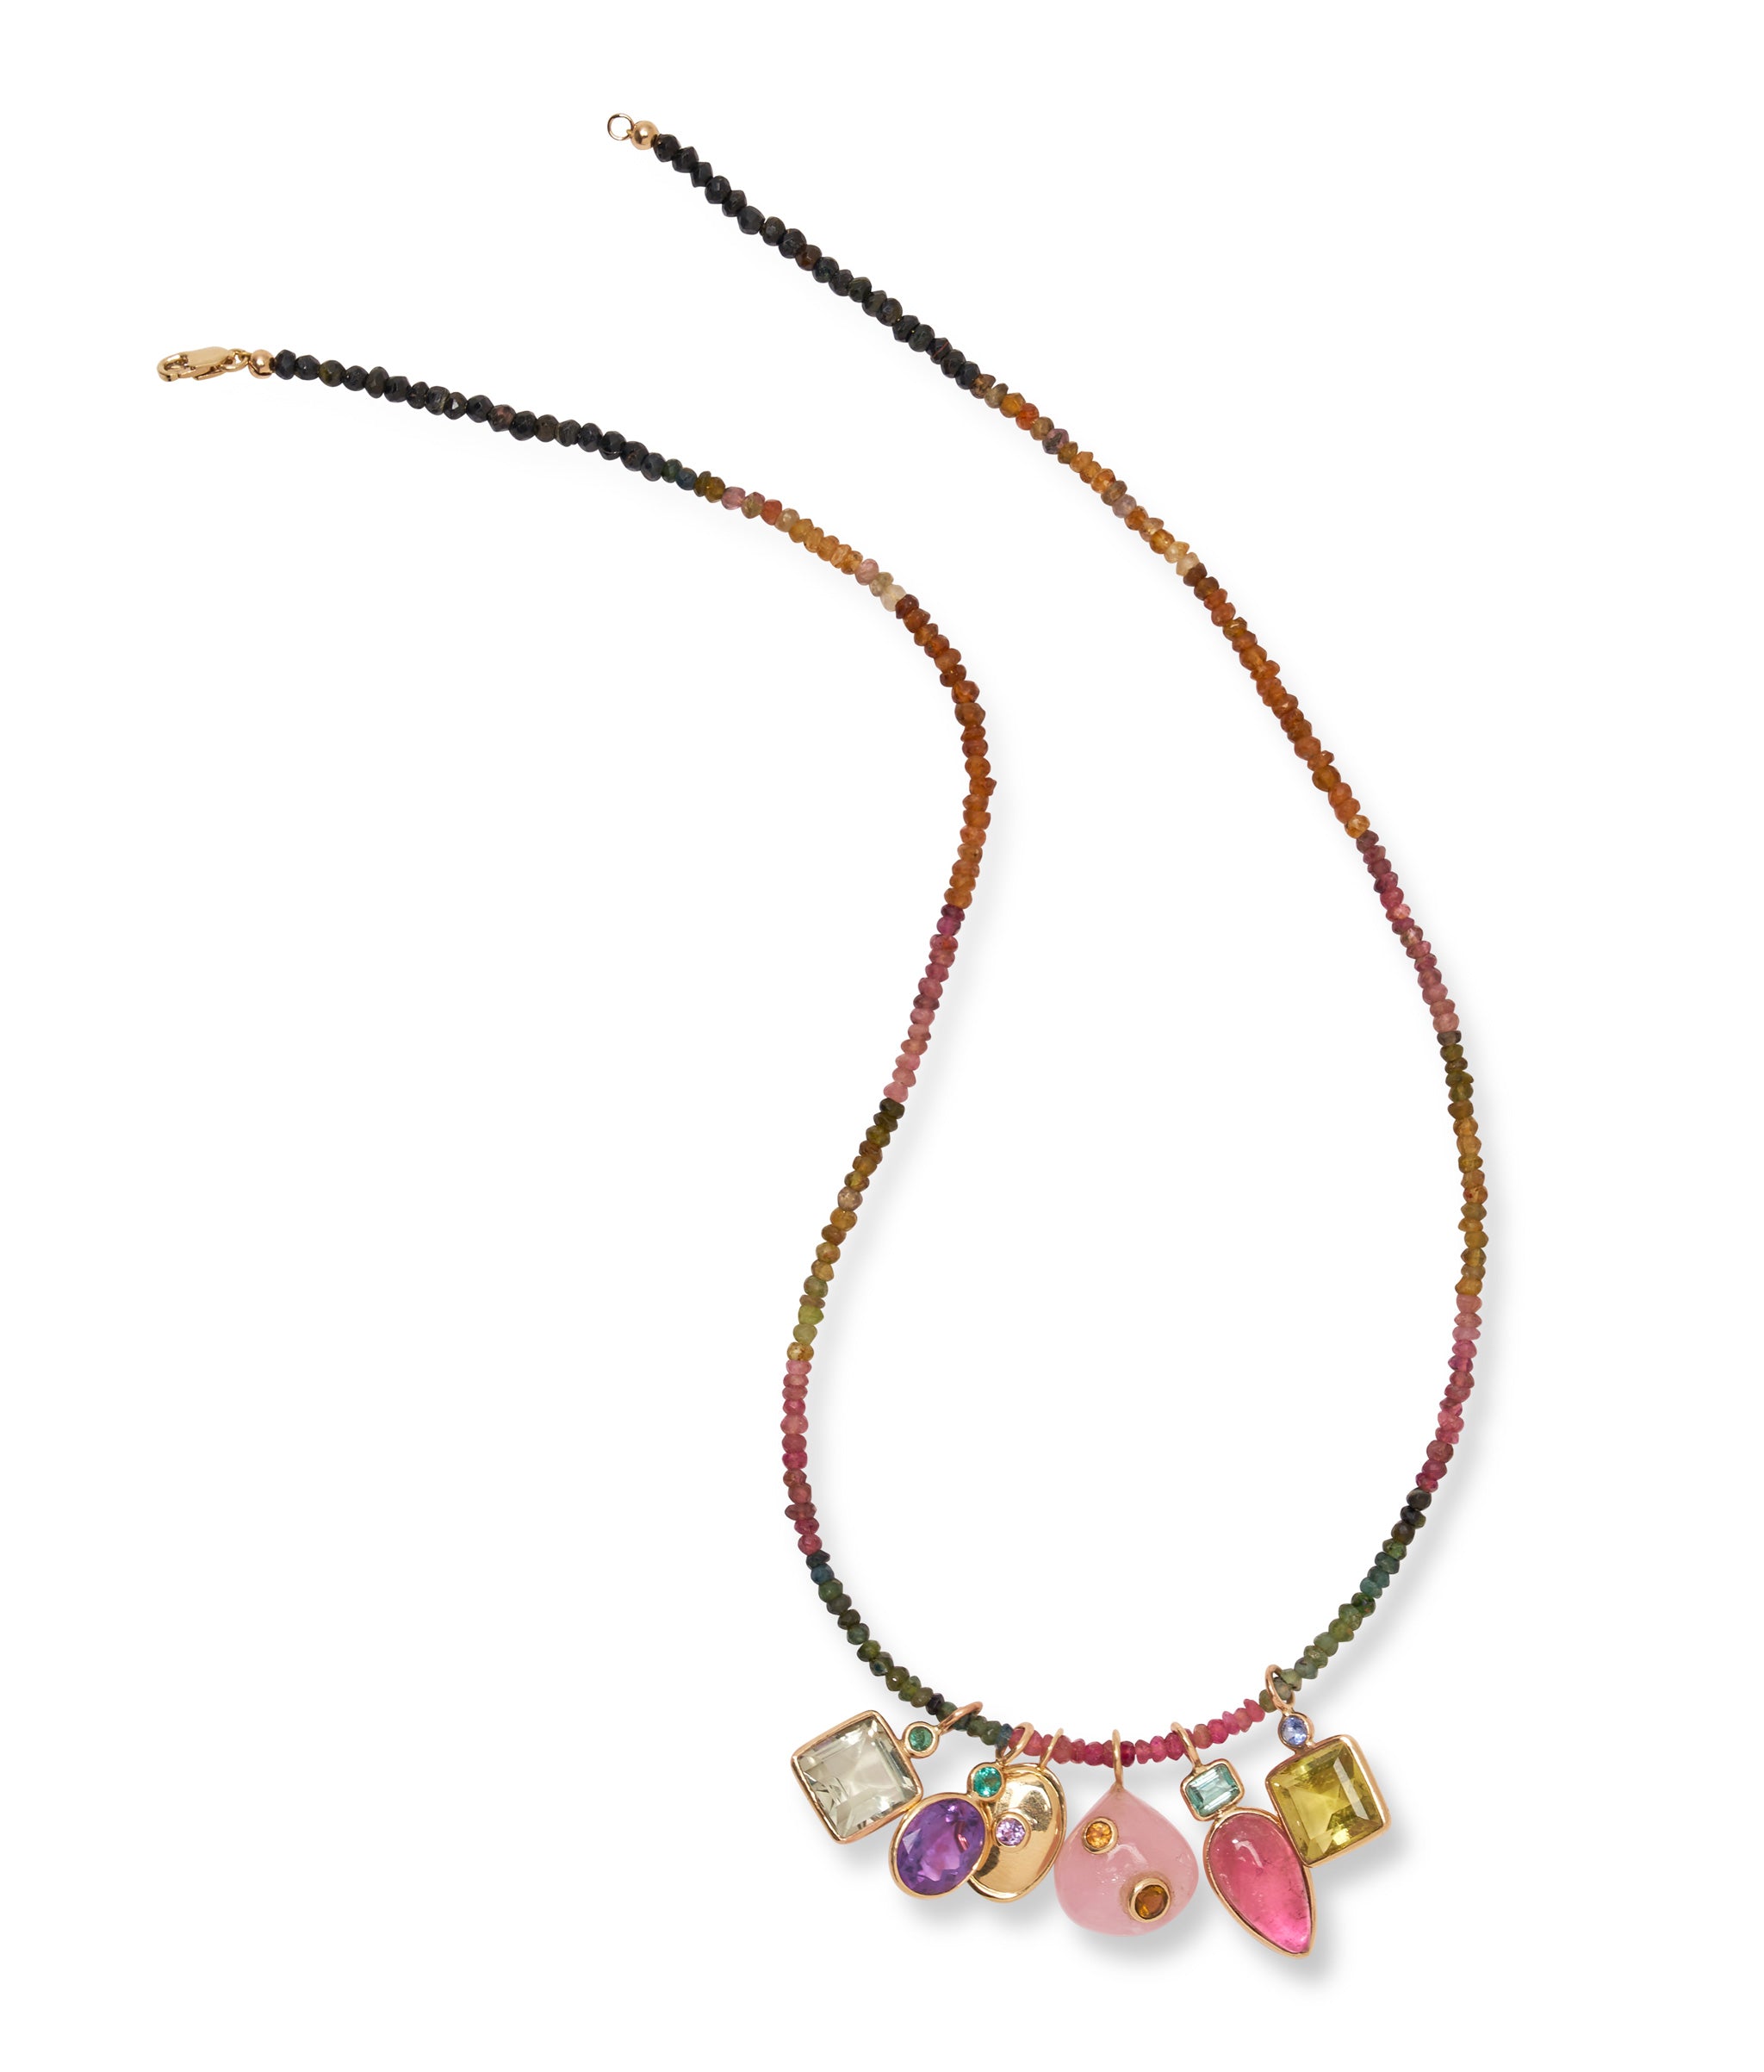 Tiny Beaded 14k Gold Necklace in Rainbow Tourmaline